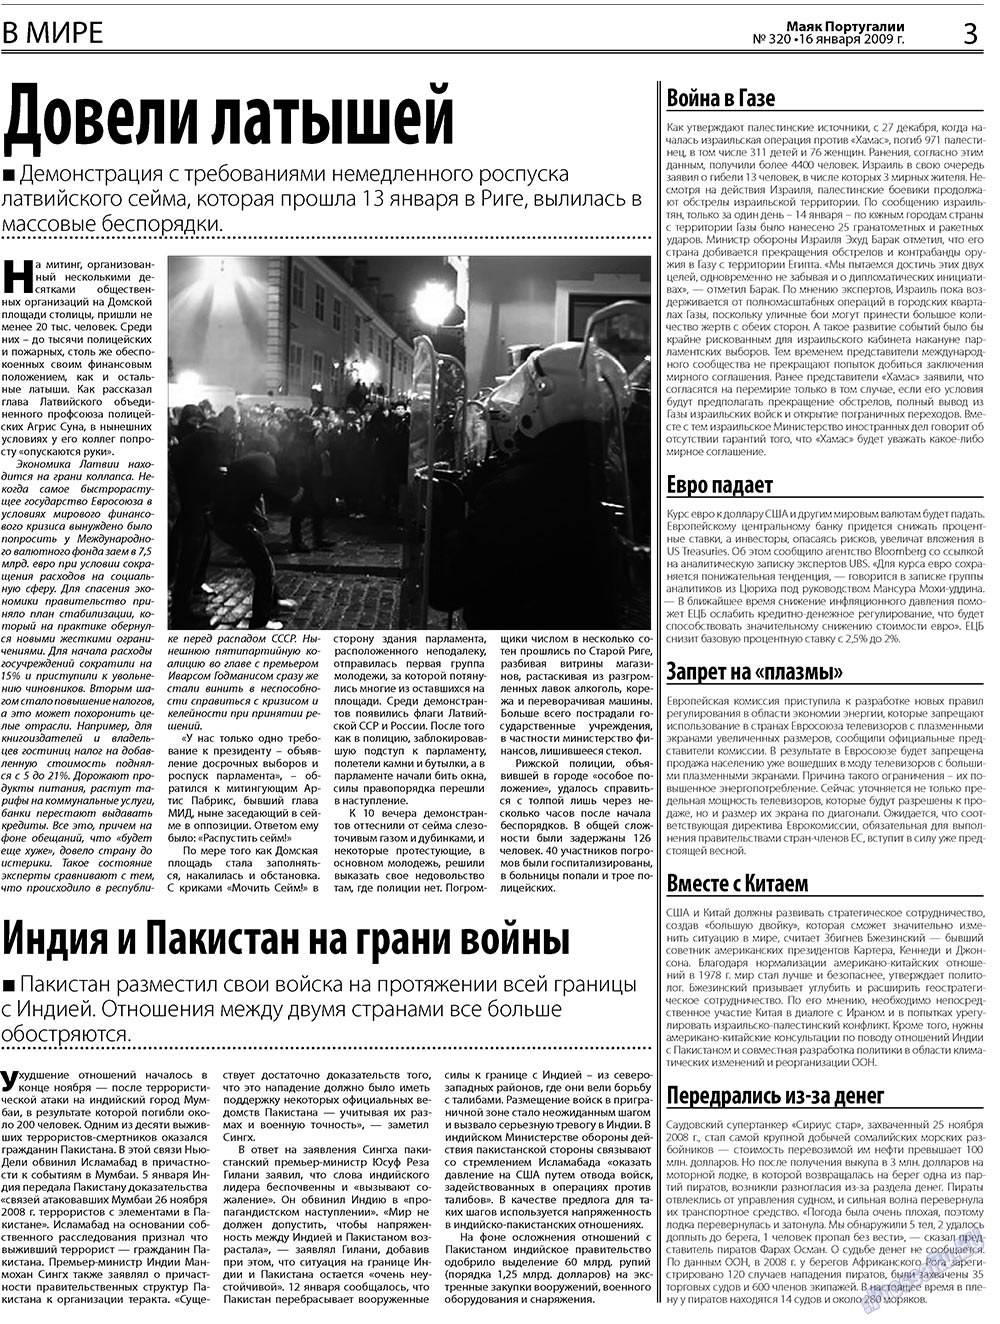 Маяк Португалии, газета. 2009 №3 стр.3